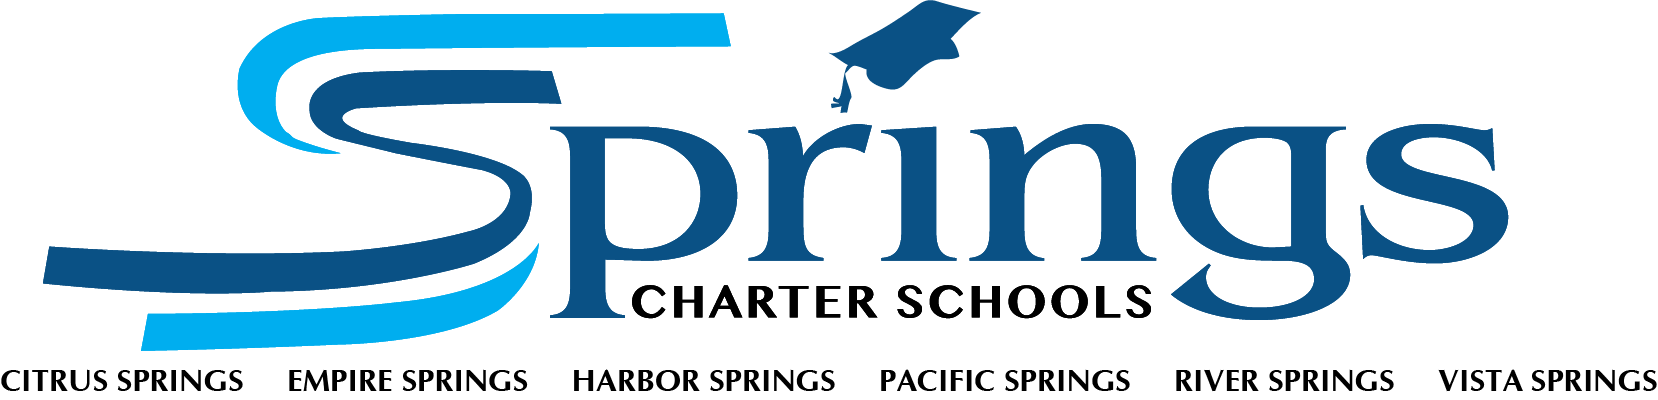 Springs Charter School logo